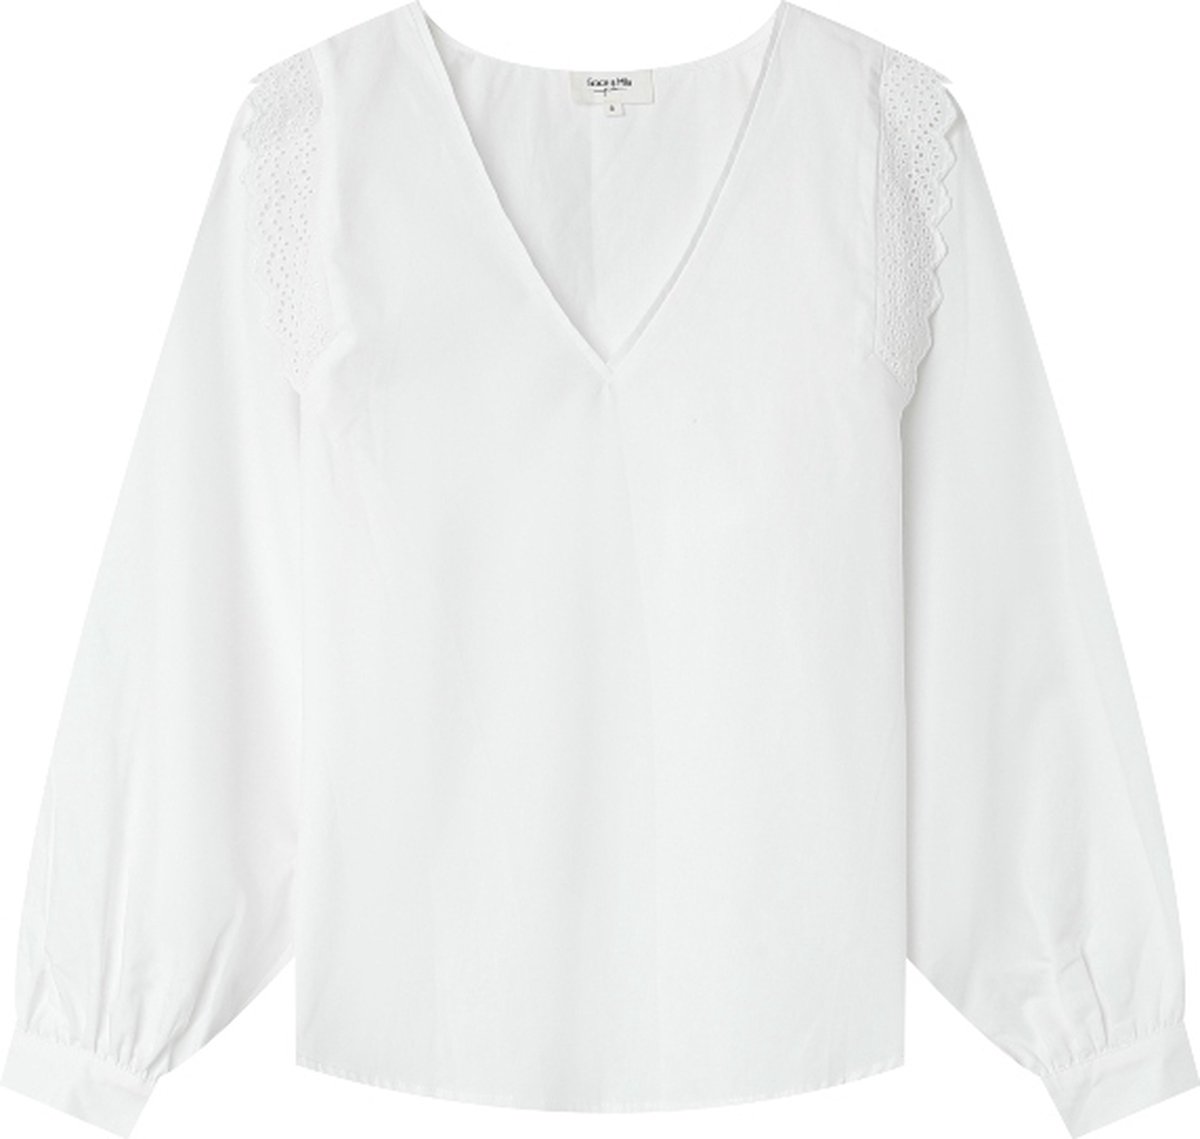 Witte blouse met ruches Geza - Grace & Mila - Maat L